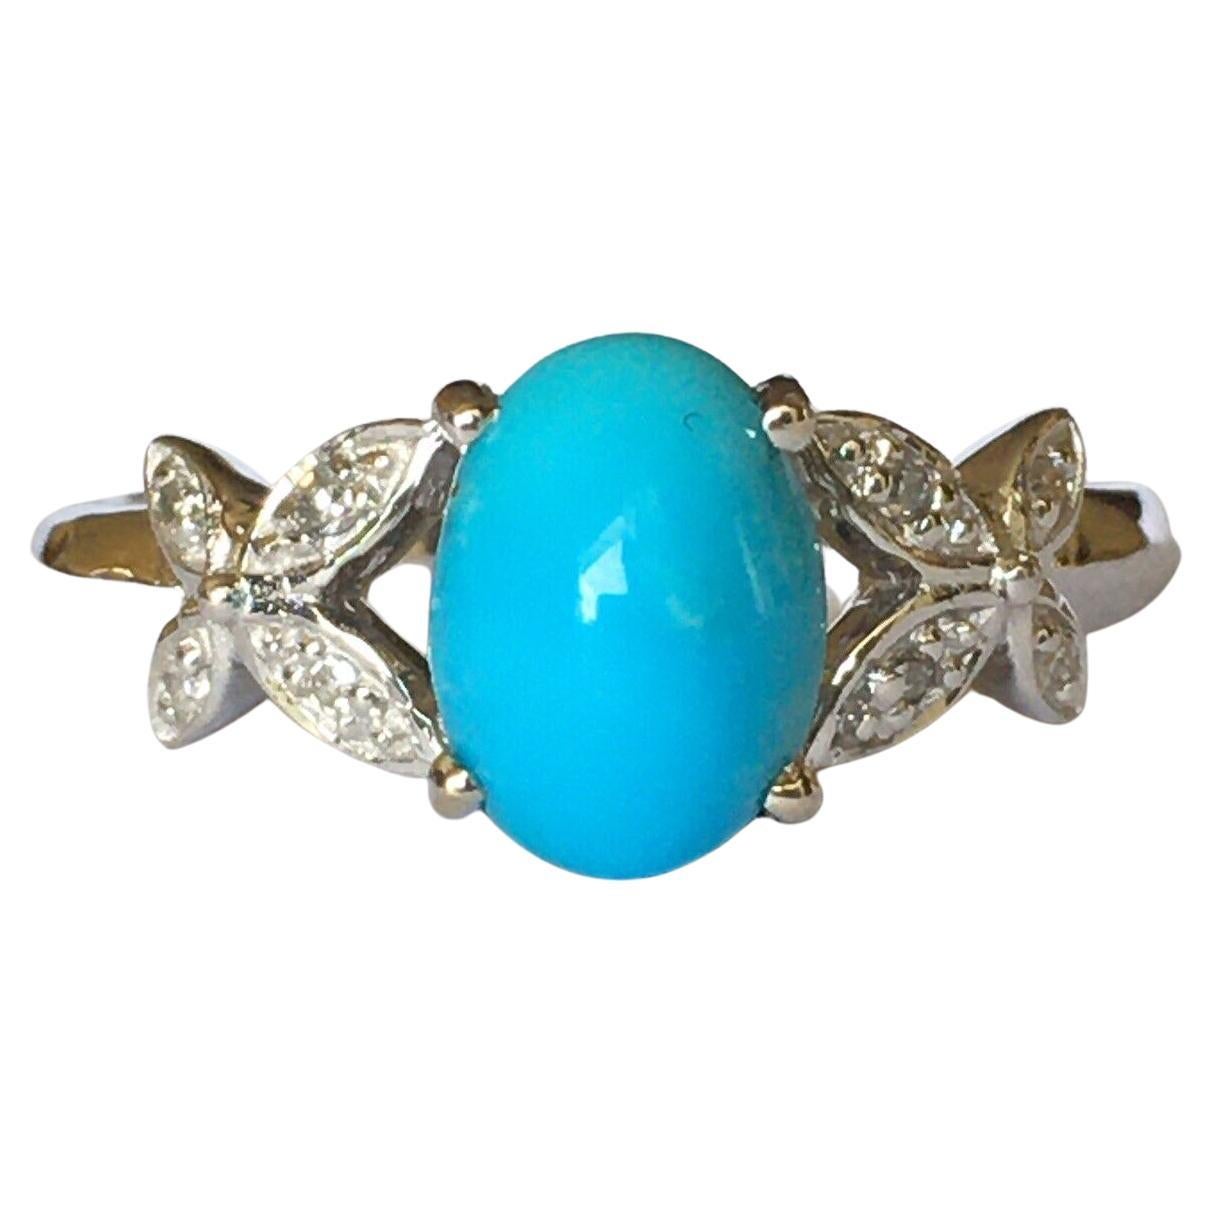 14 Karat White Gold Hallmarked Lady's Diamond Persian Turquoise Ring 1970s Size